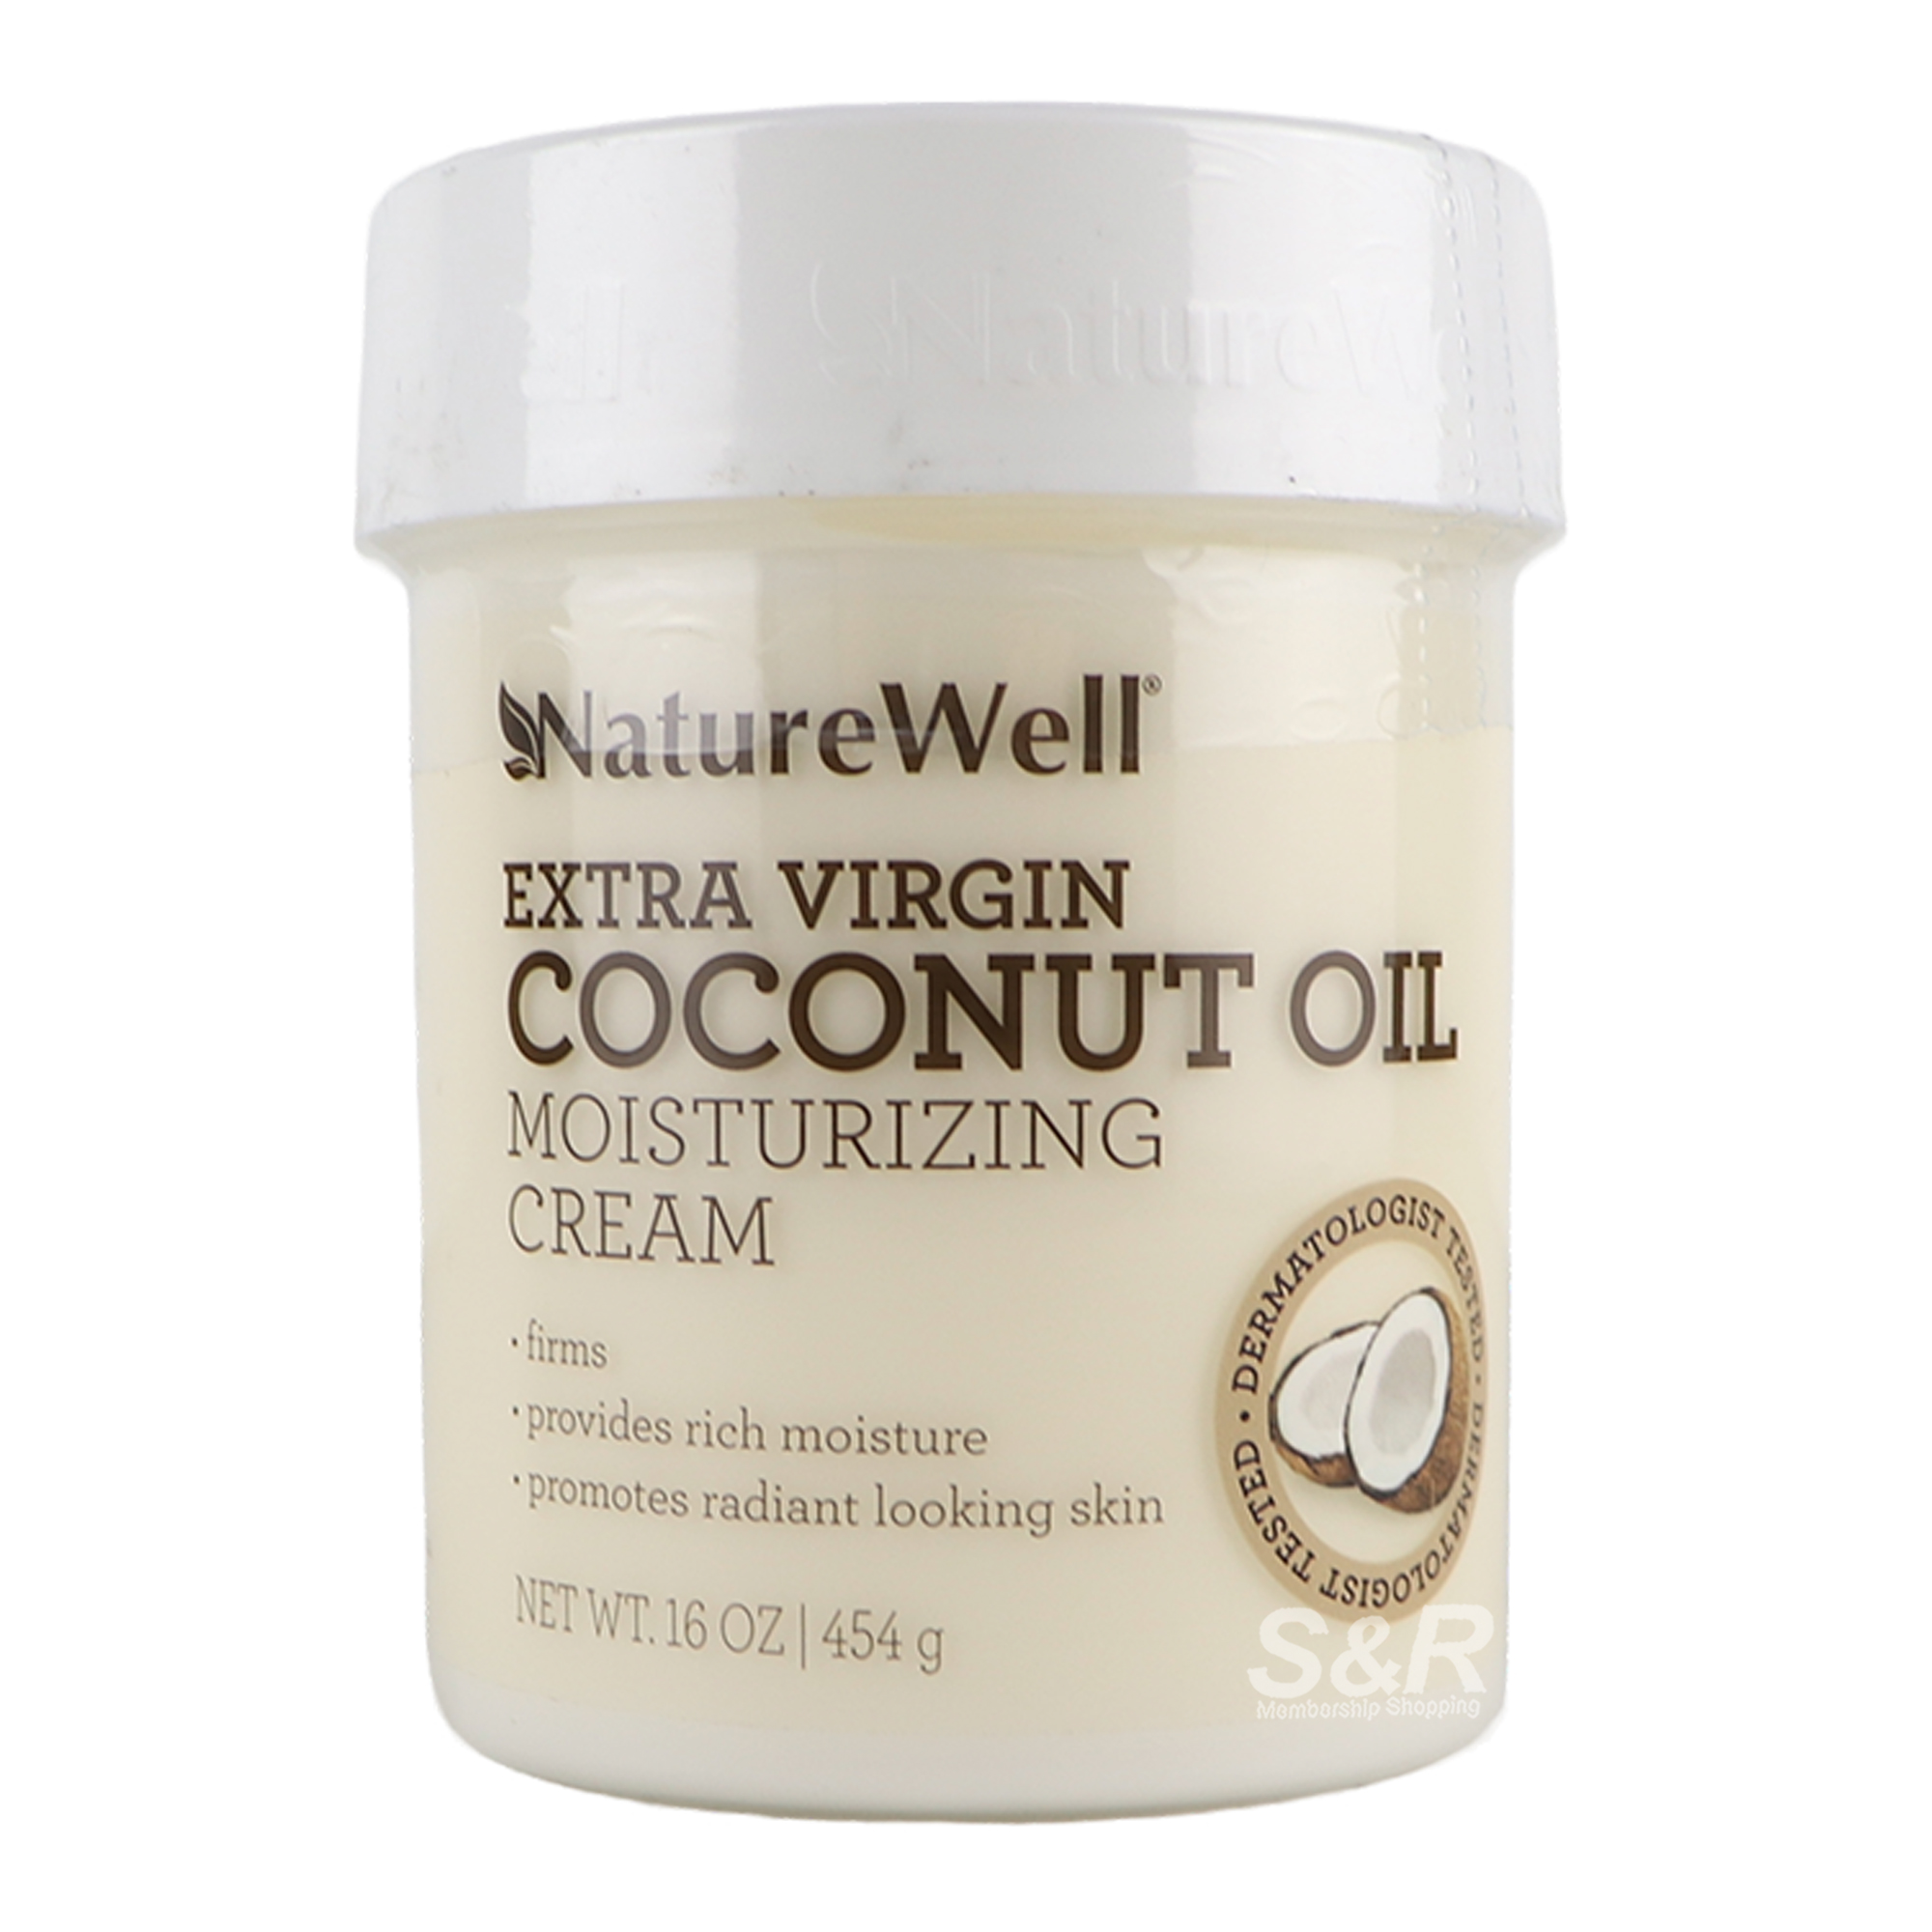 NatureWell Extra Virgin Coconut Oil Moisturizing Cream 454g